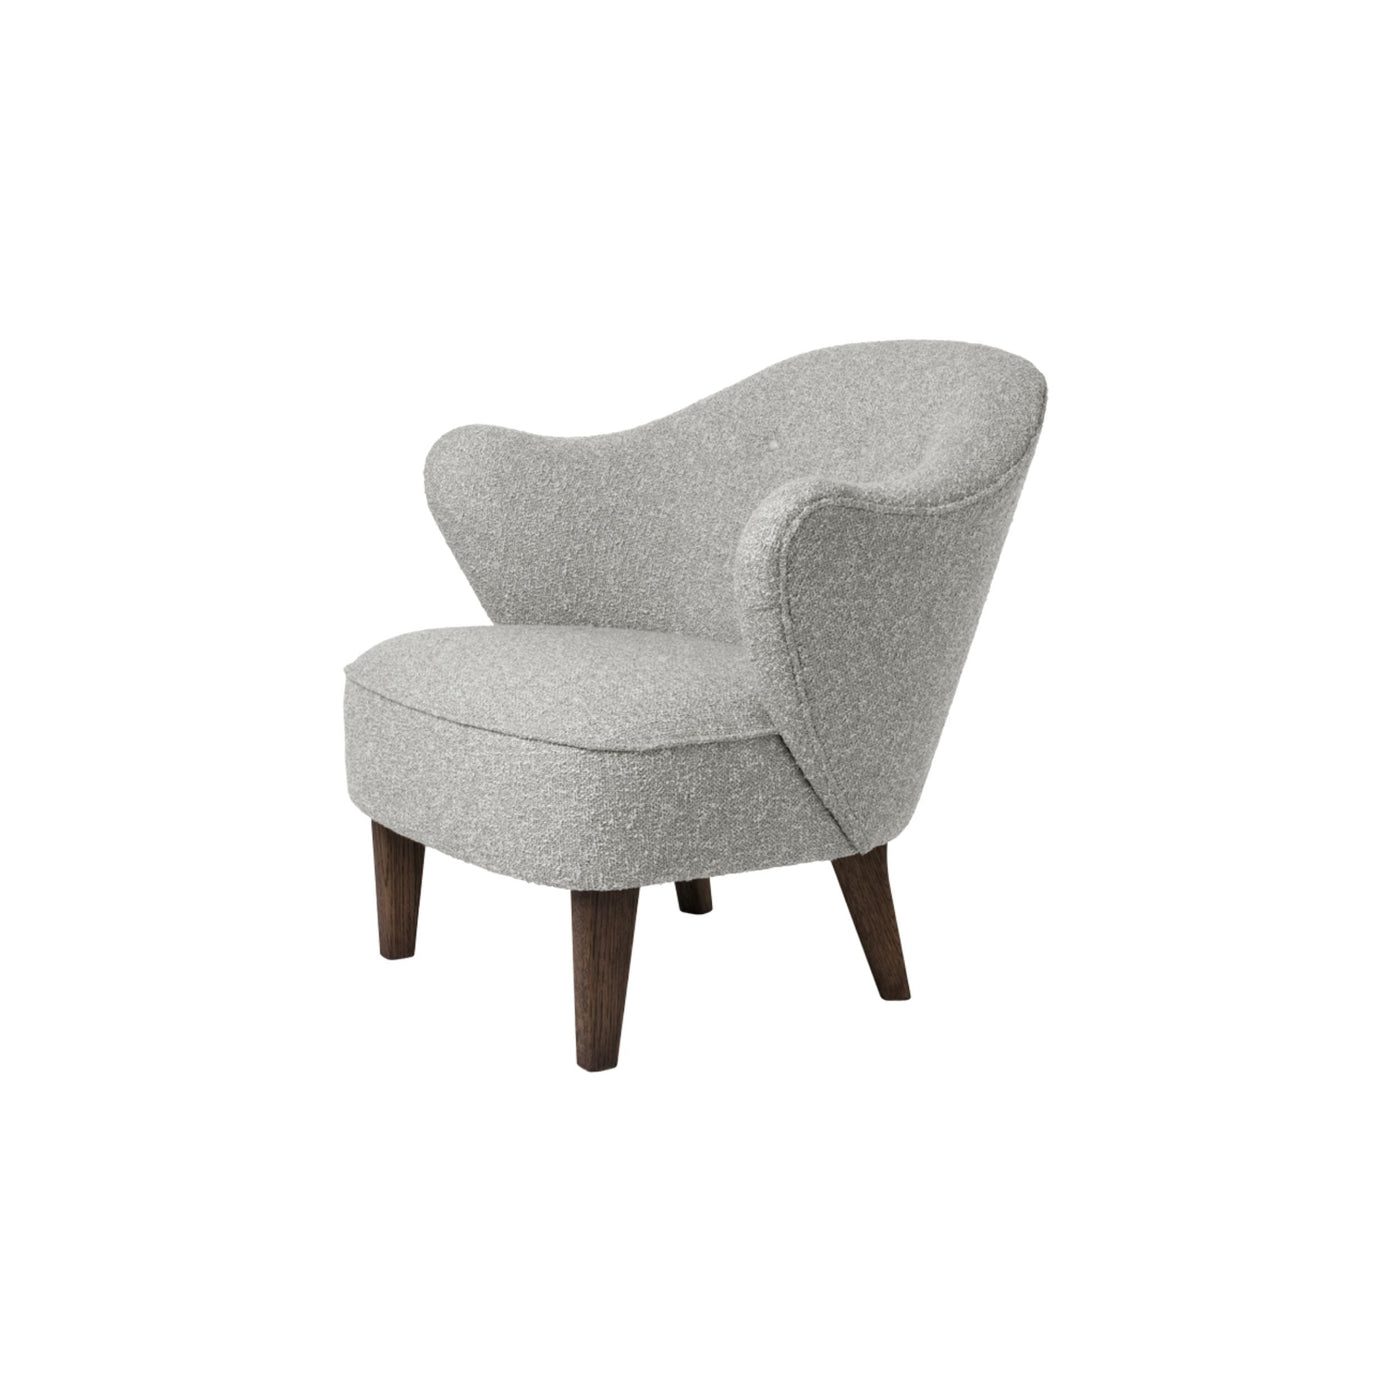 audo Ingeborg armchair. Made to order from someday designs #colour_vidar-123